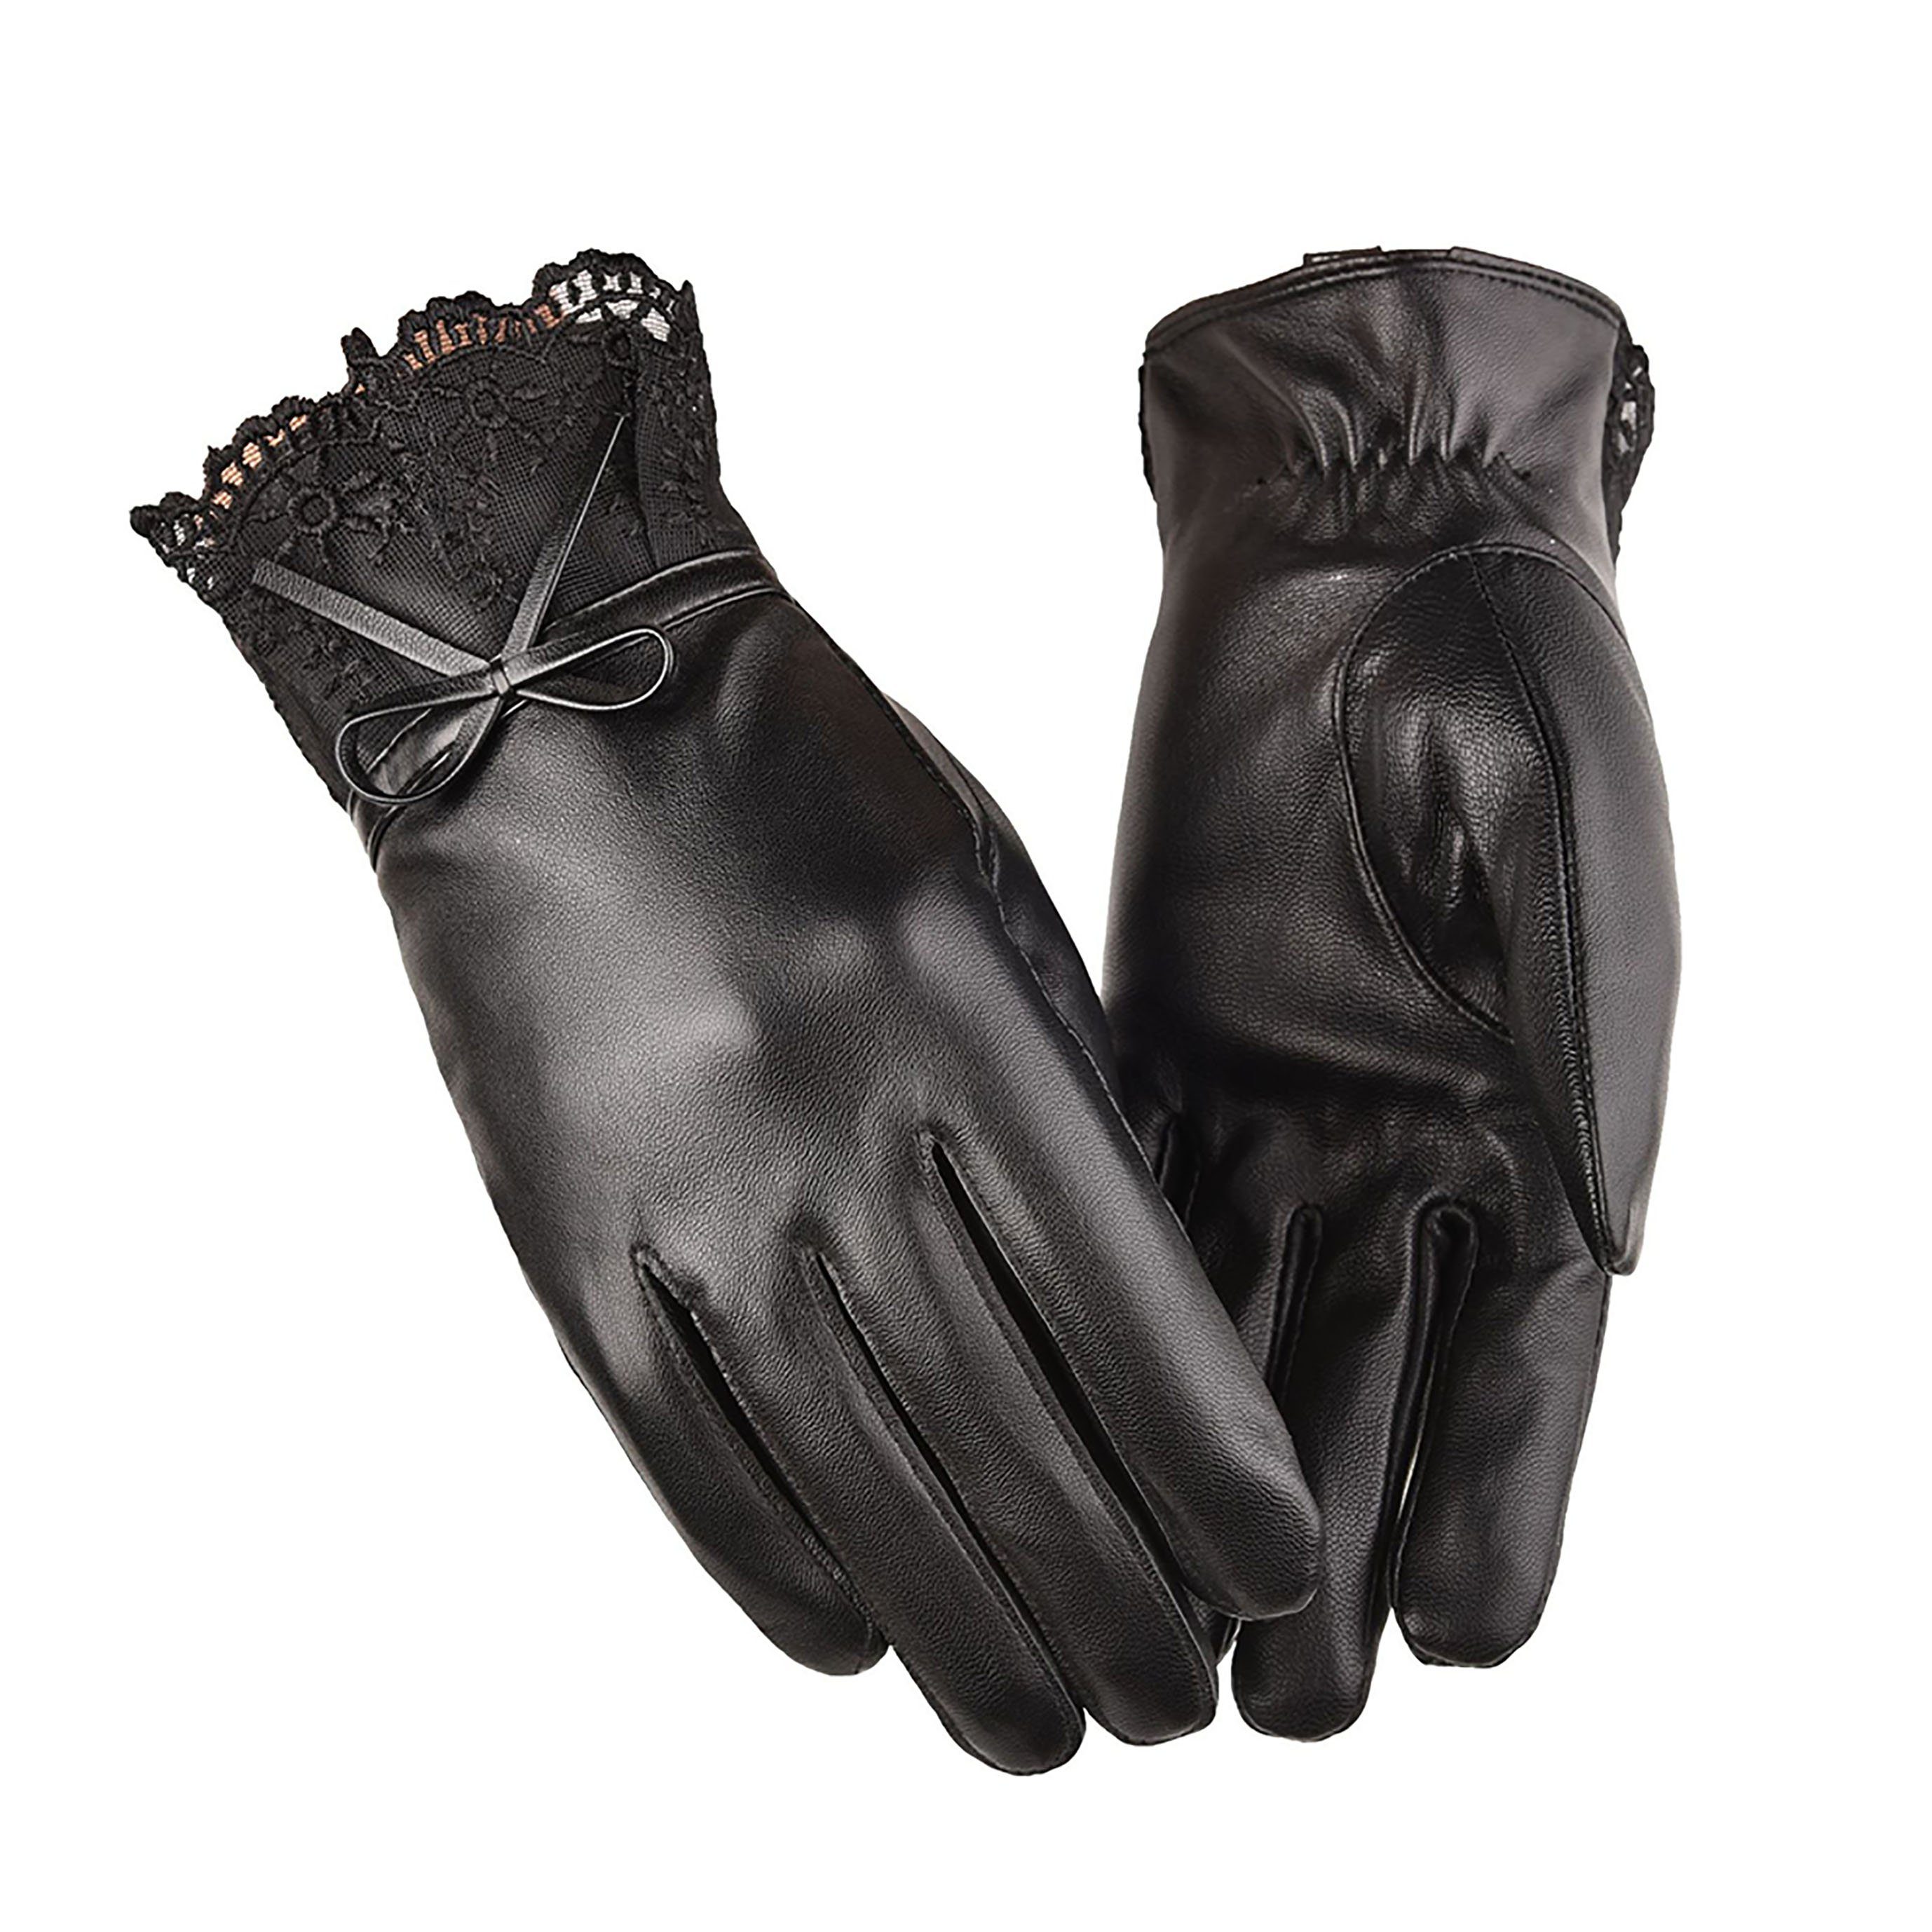 SRRINM Trikot-Handschuhe Lederhandschuhe Winddichte und kältebeständige Lederhandschuhe